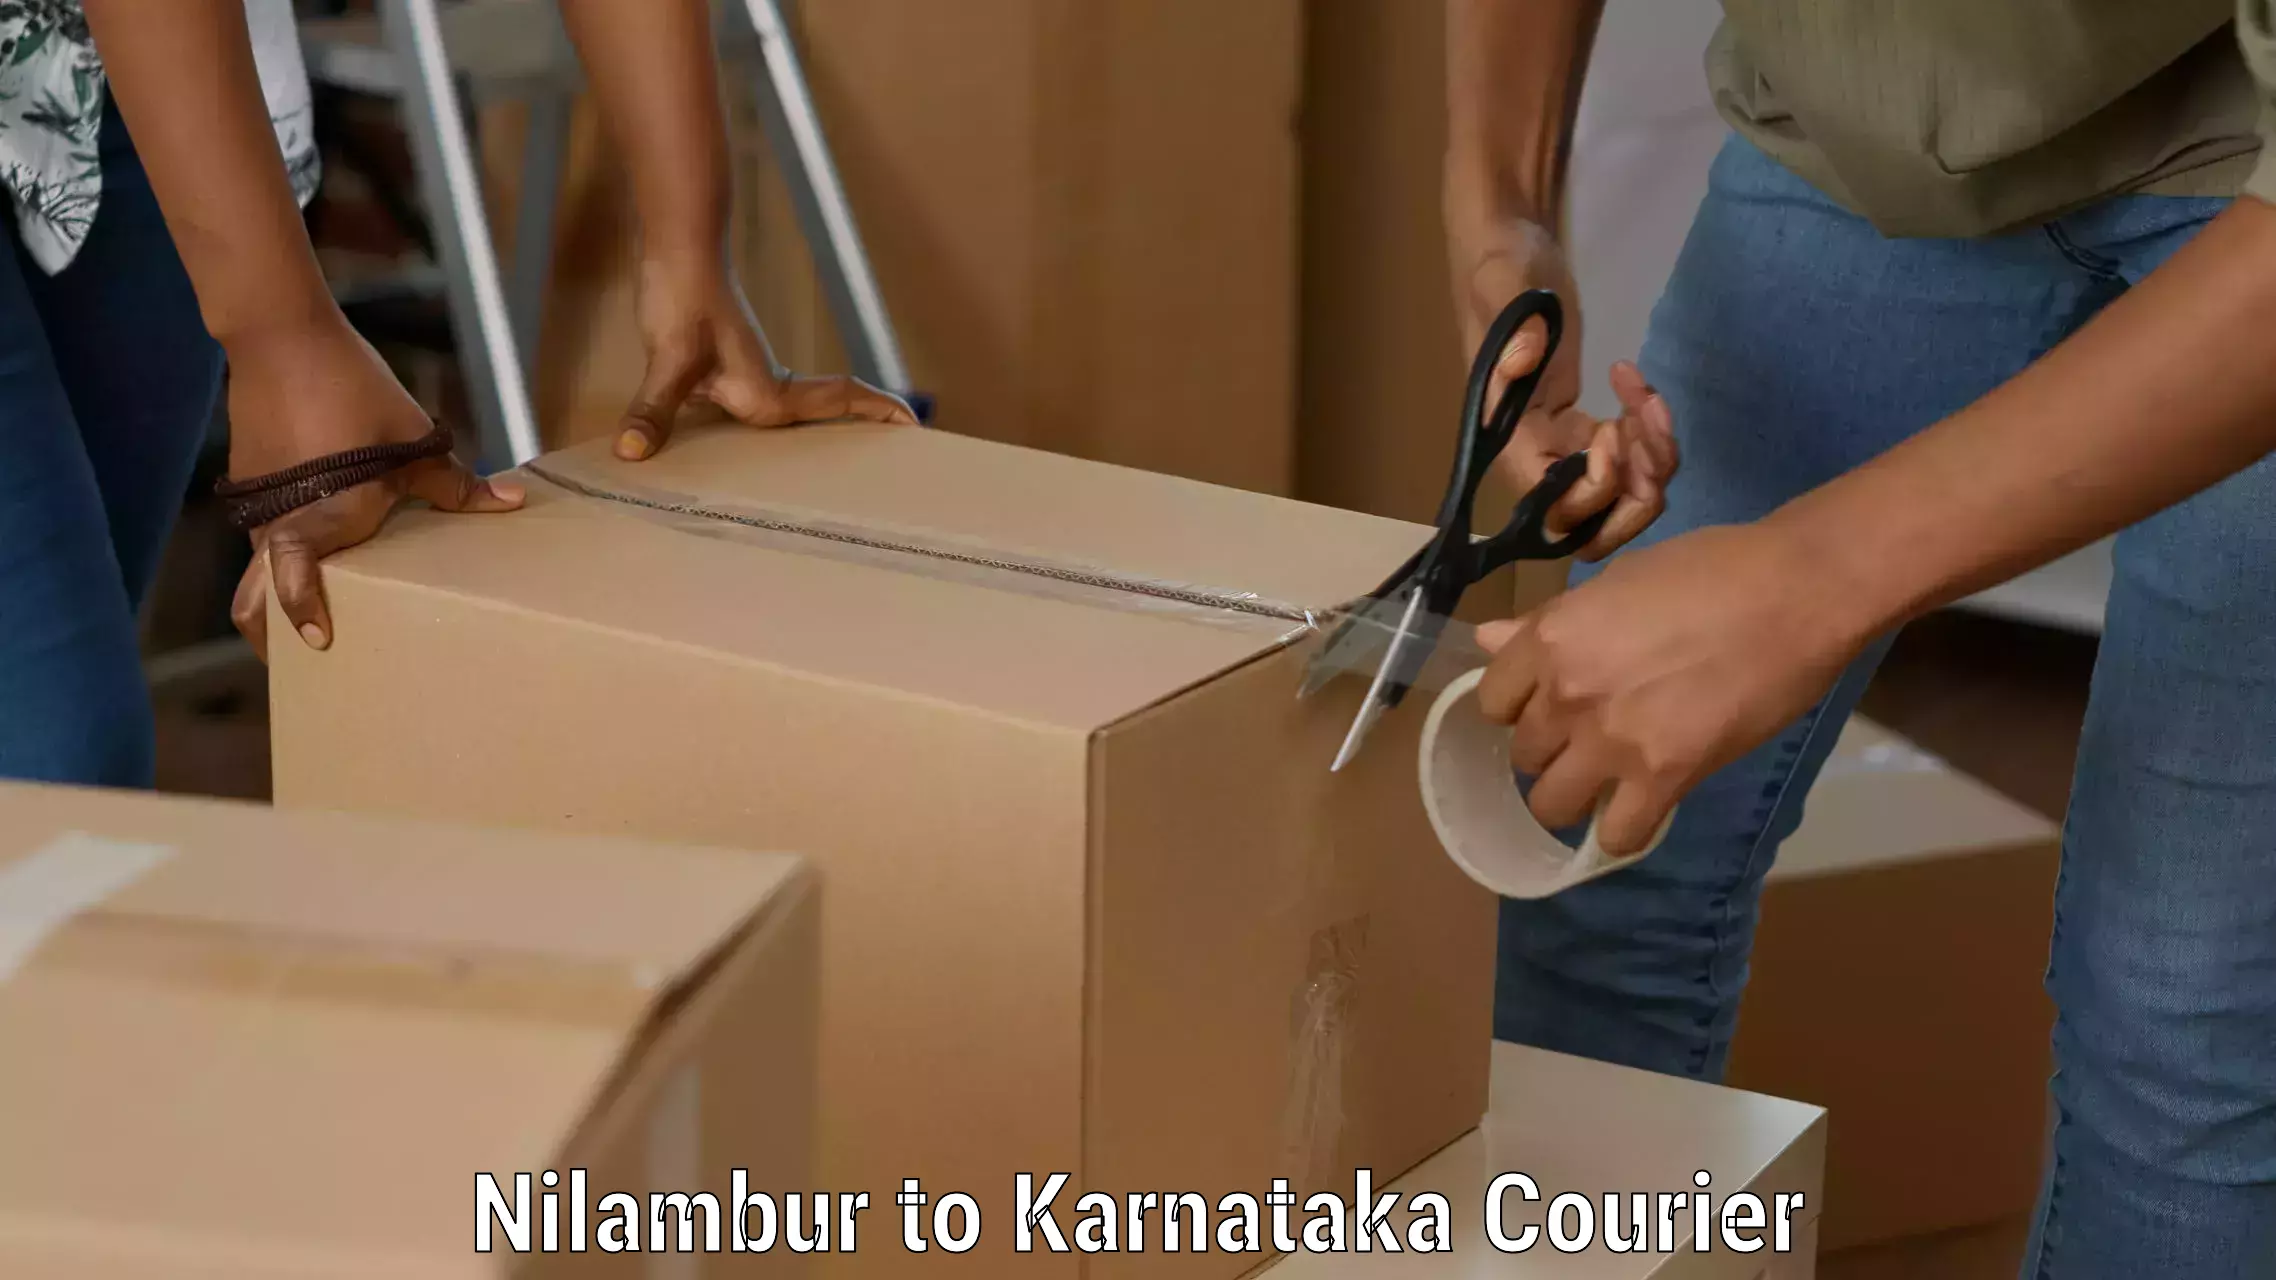 Courier service partnerships Nilambur to Yellare